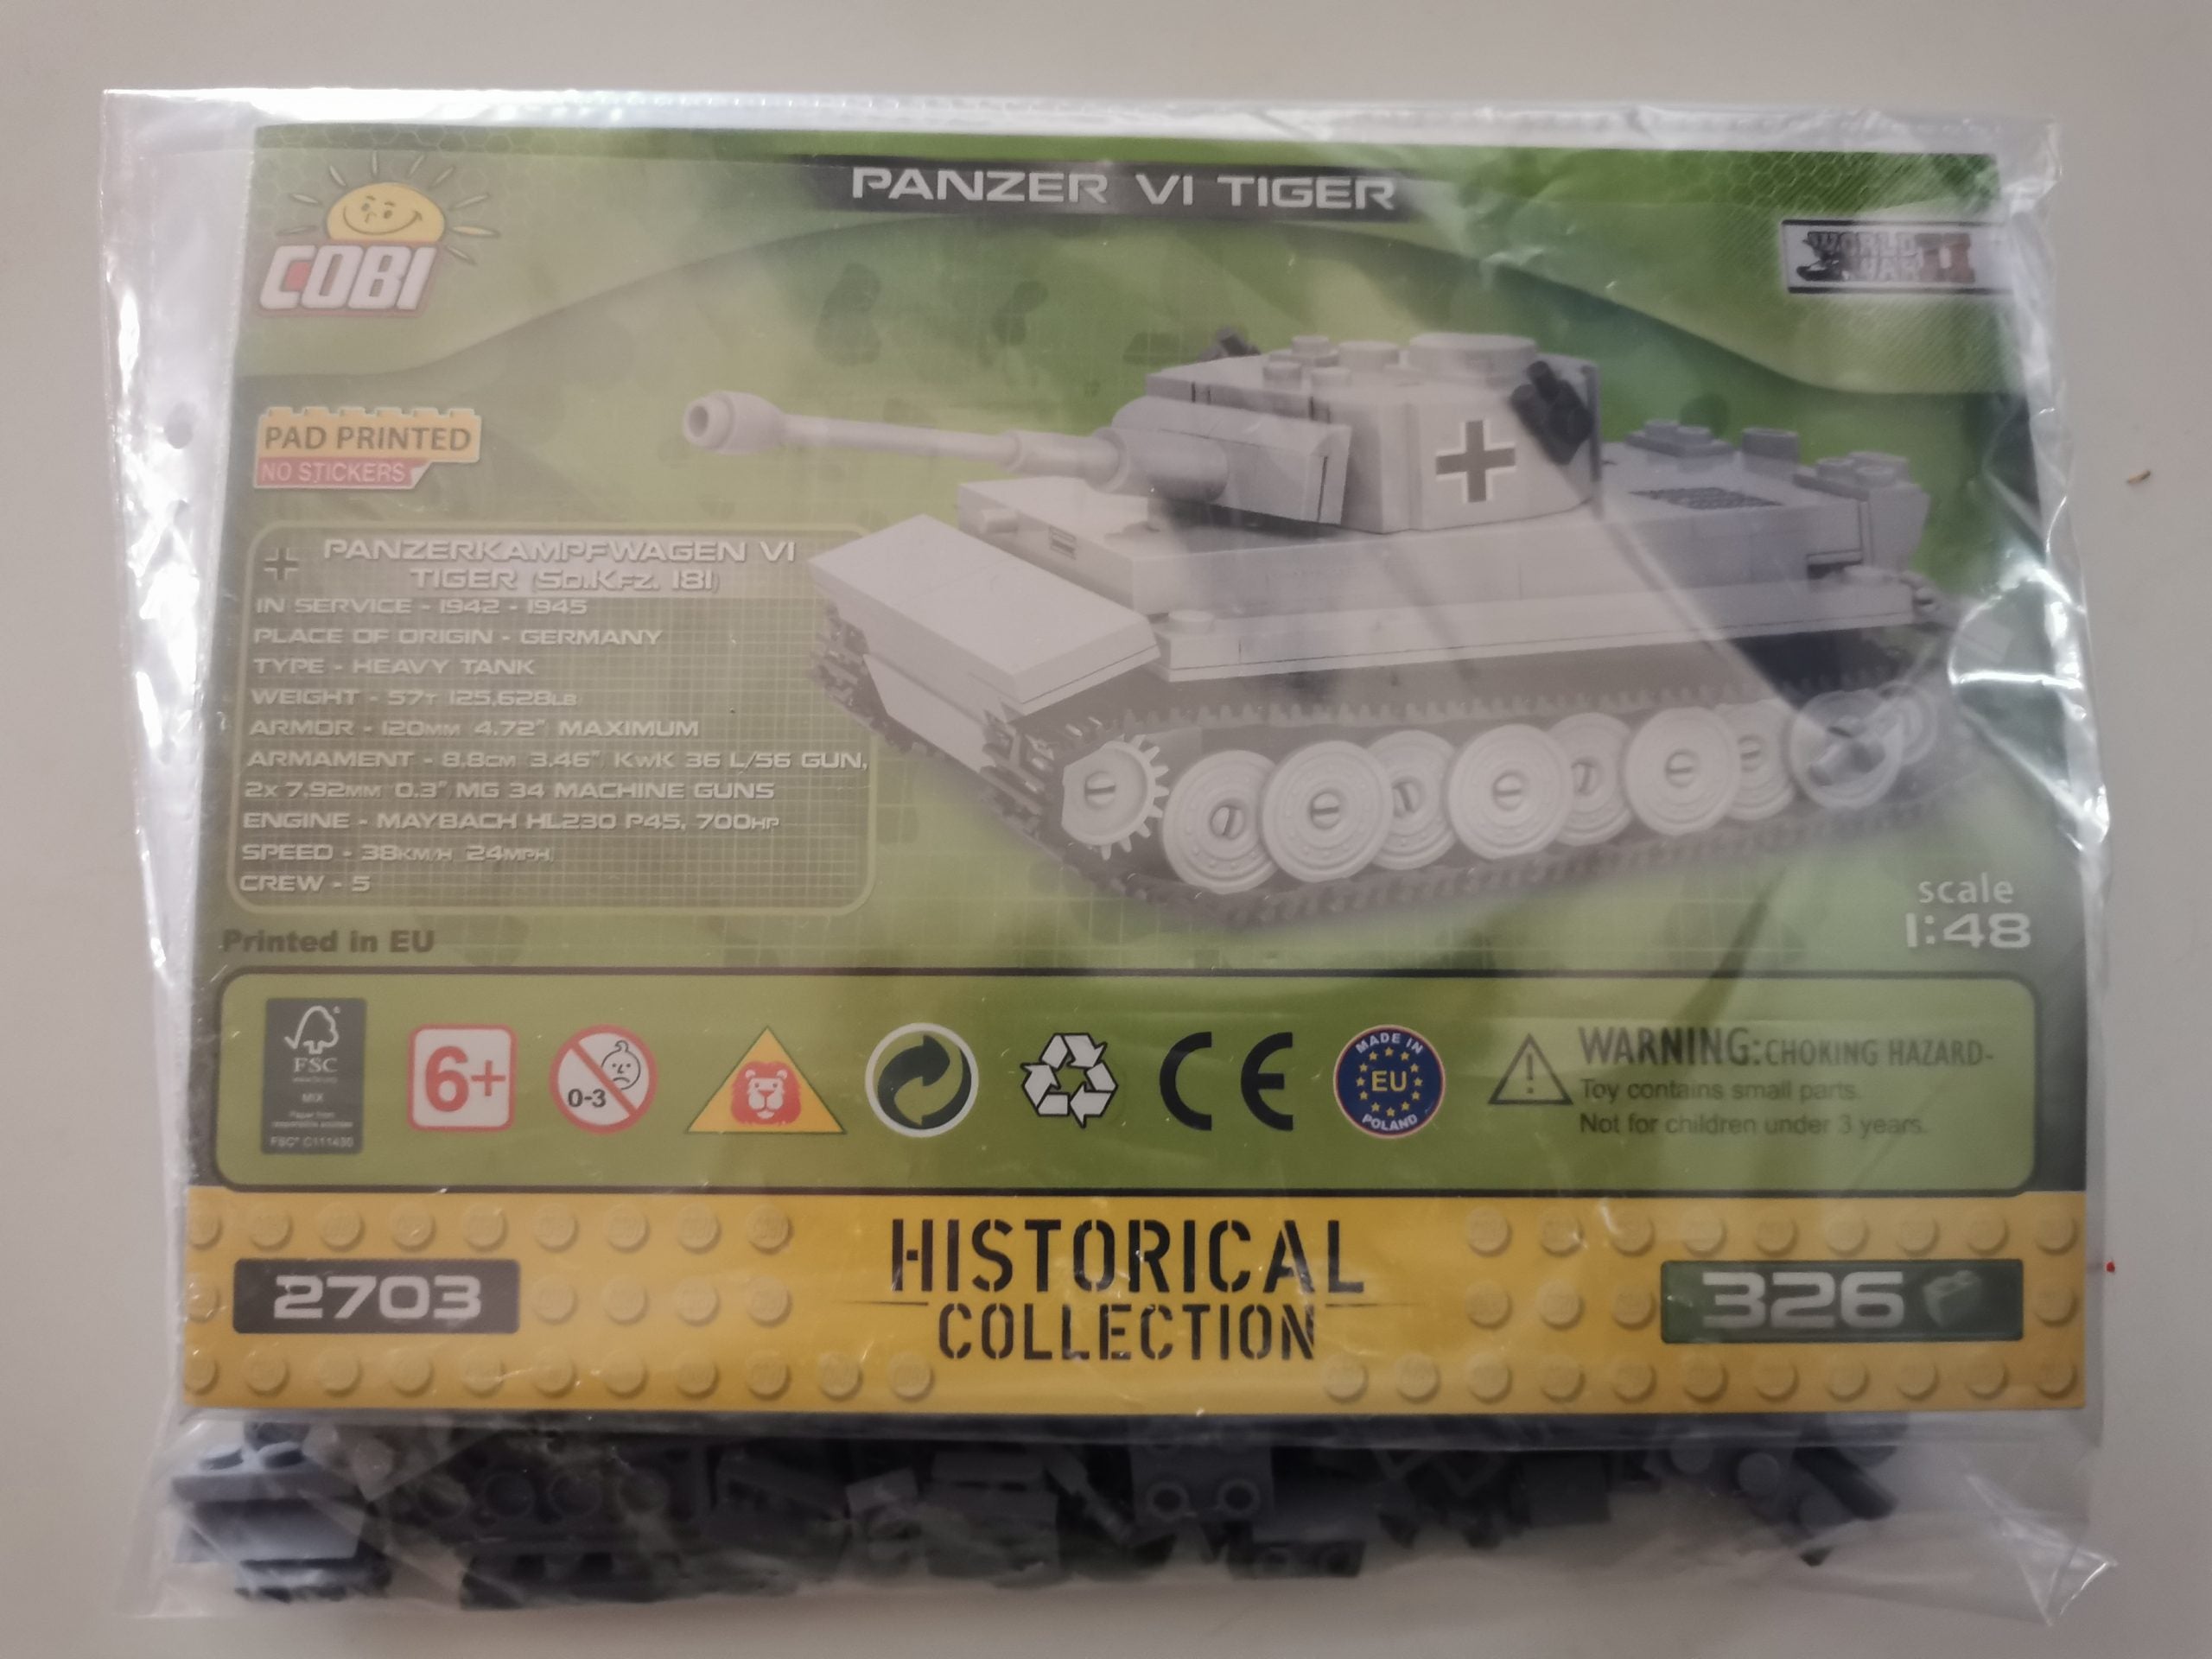 Cobi 2703 Panzer VI Tiger (1:48) gebraucht